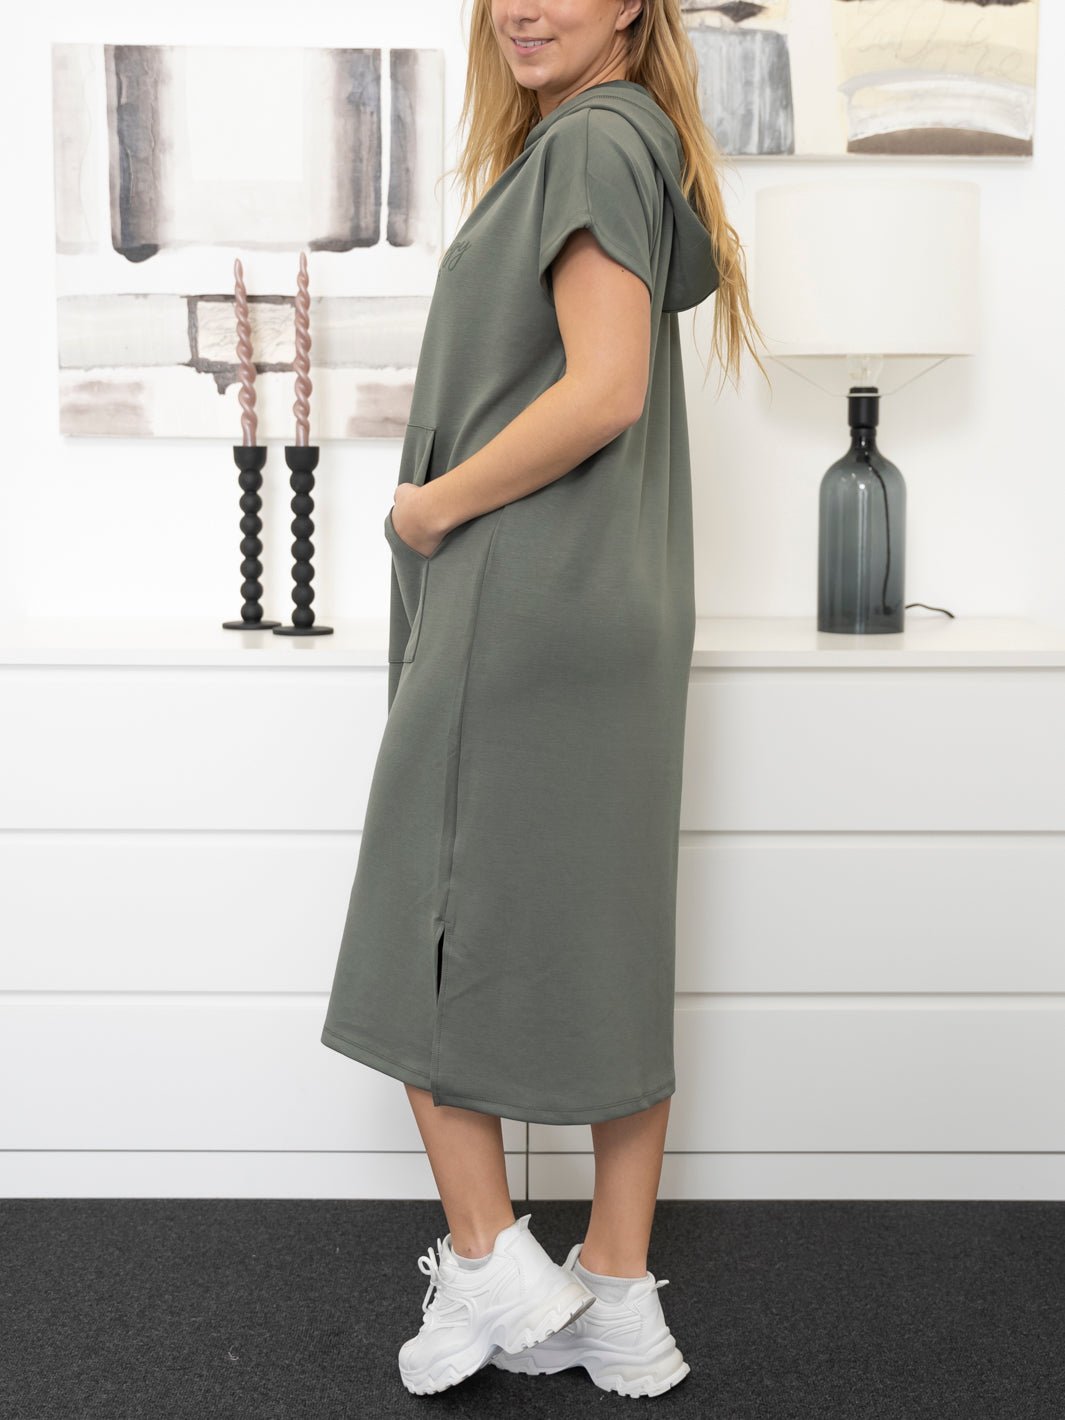 Soya Concept Banu 178 dress dusty olive - Online-Mode